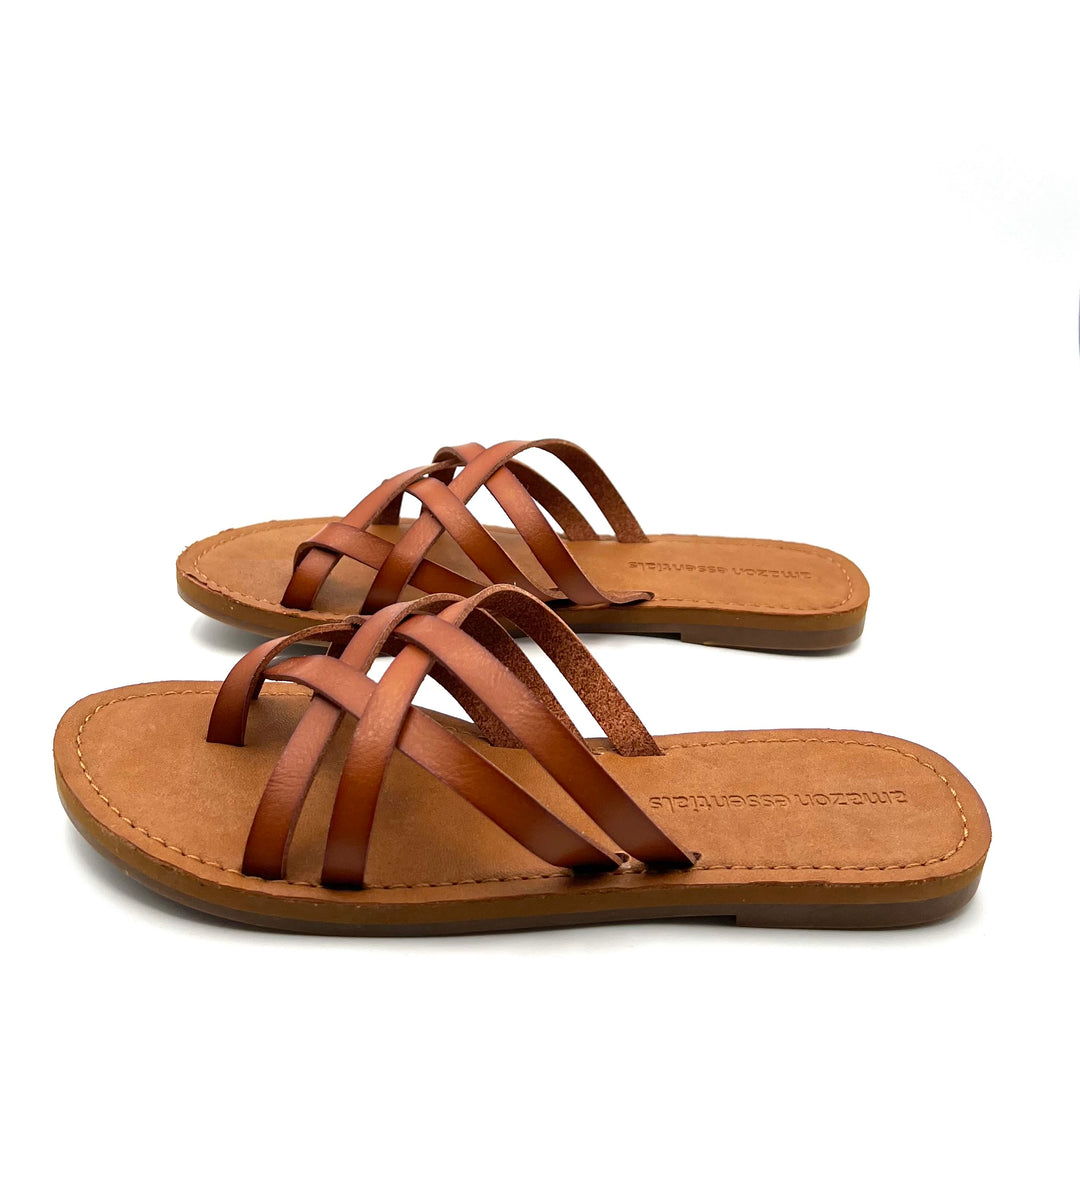 Brown Strap Sandals - Size 6